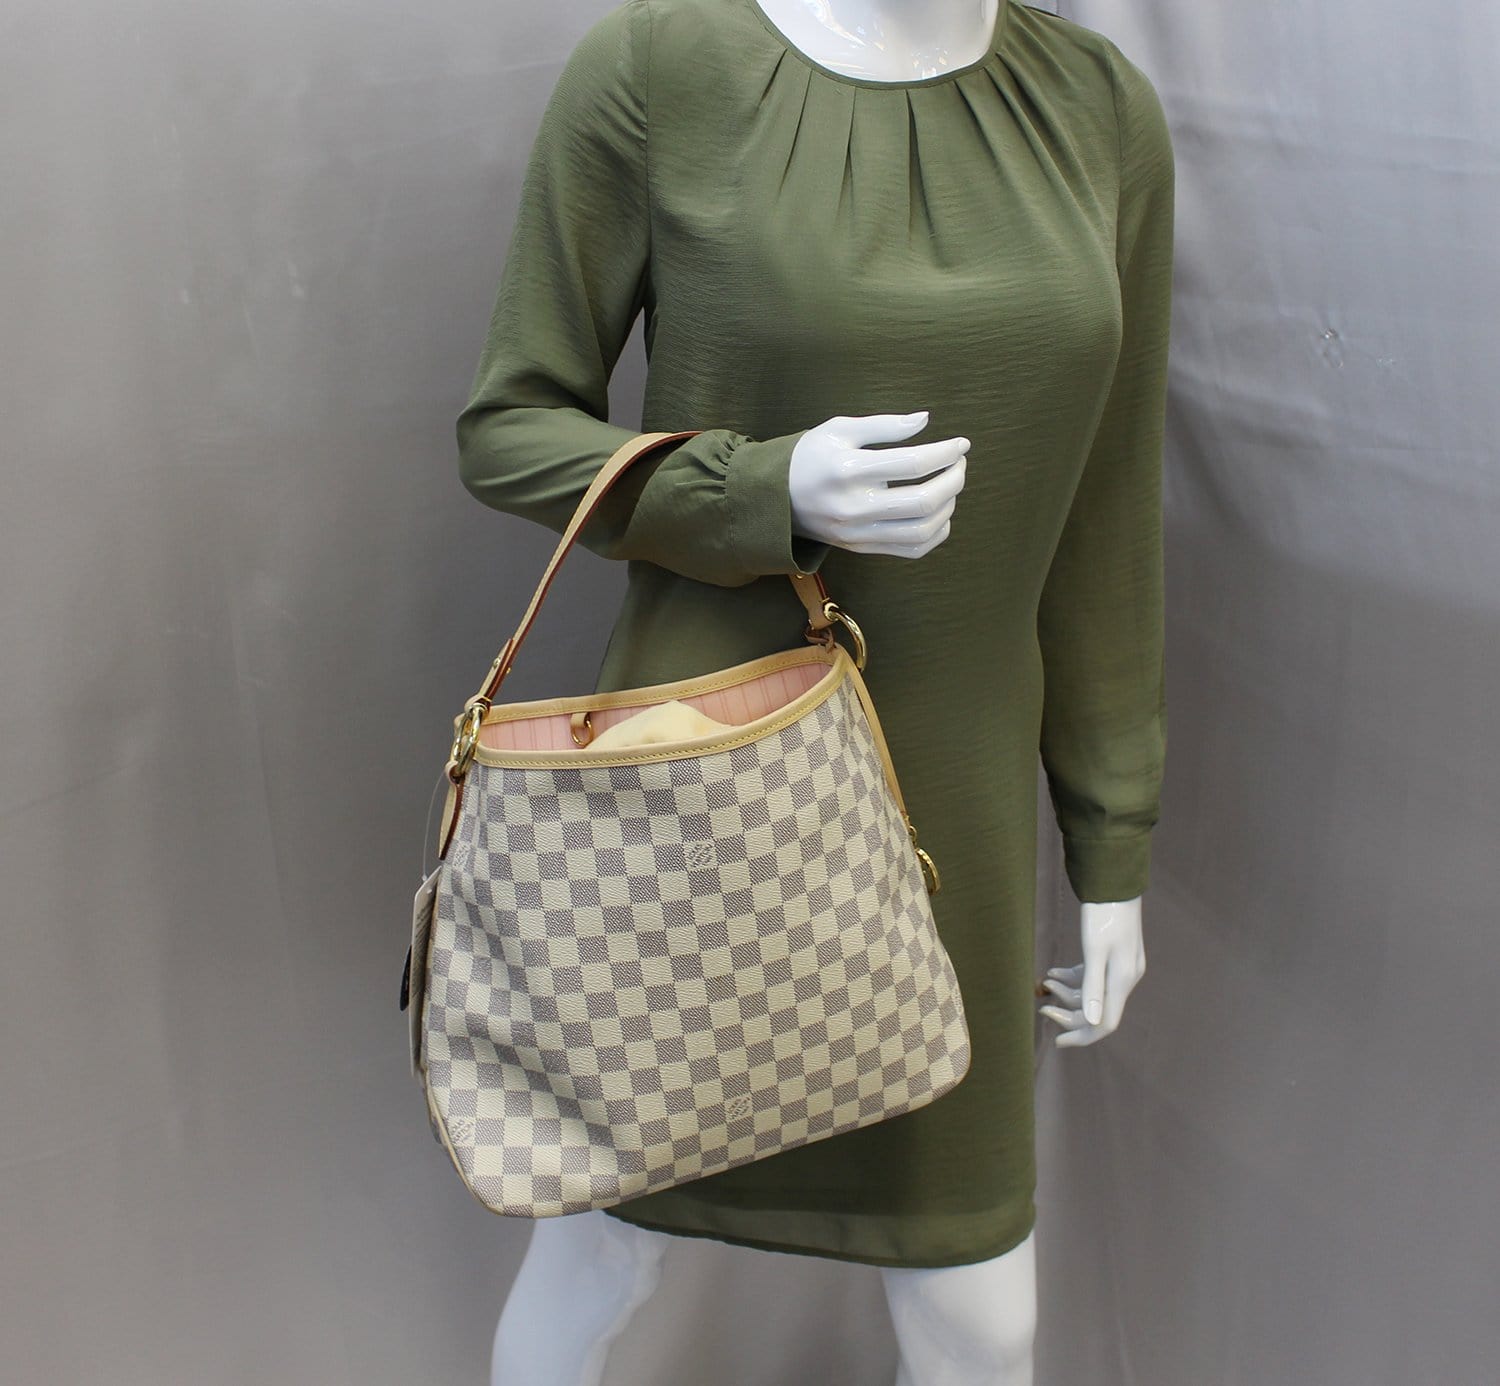 Louis Vuitton Damier Azur Delightful PM - Neutrals Hobos, Handbags